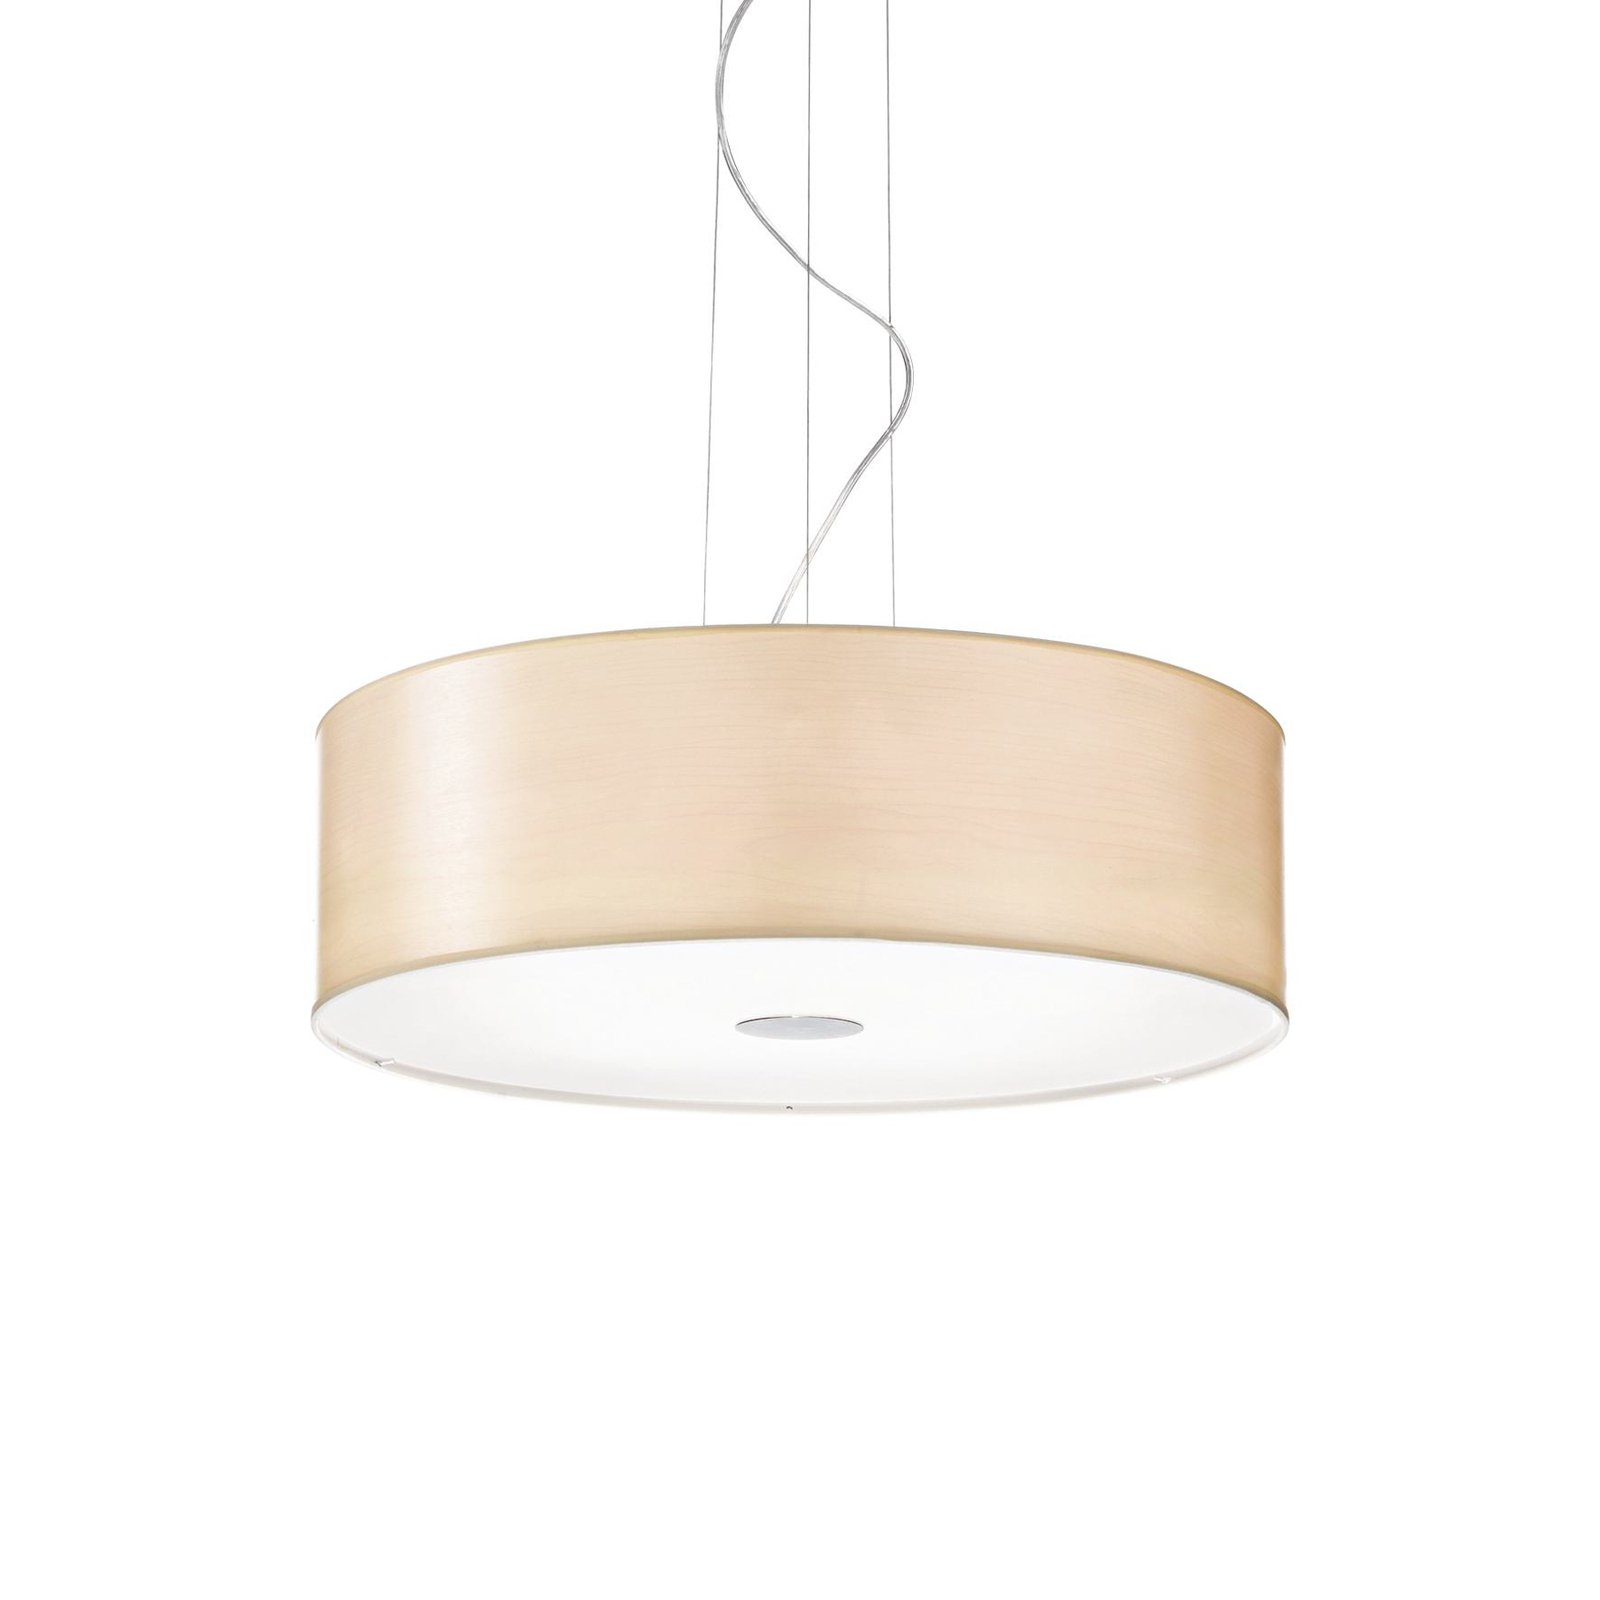 Hanglamp Ideal Lux Woody, houtdecor, glas, Ø 60 cm